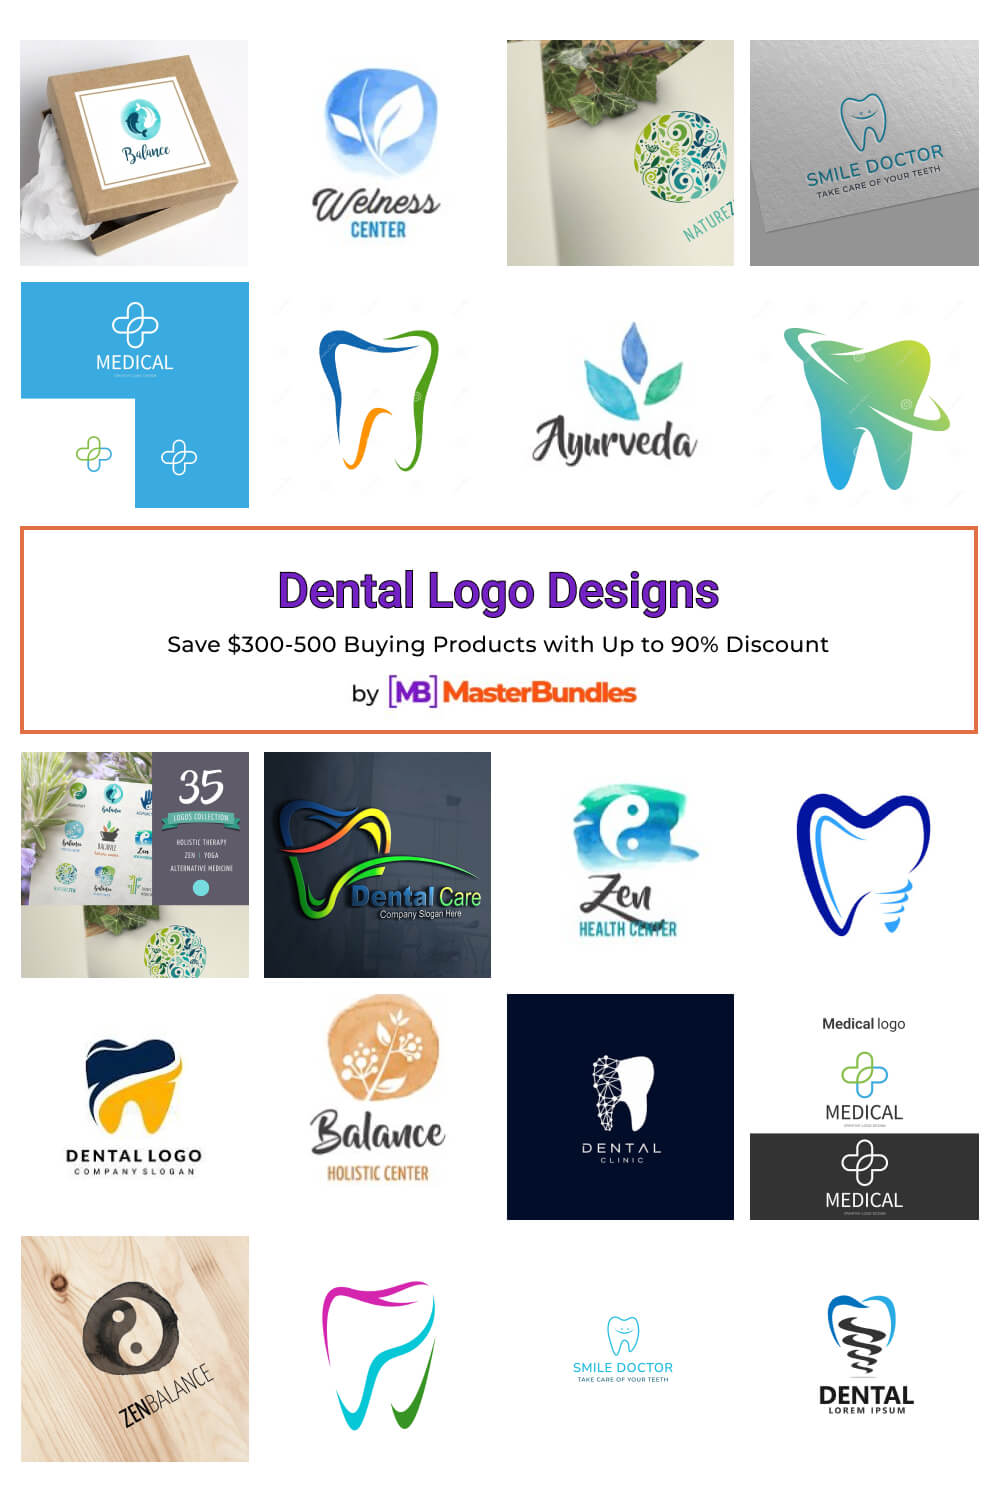 dental logo designs pinterest image.